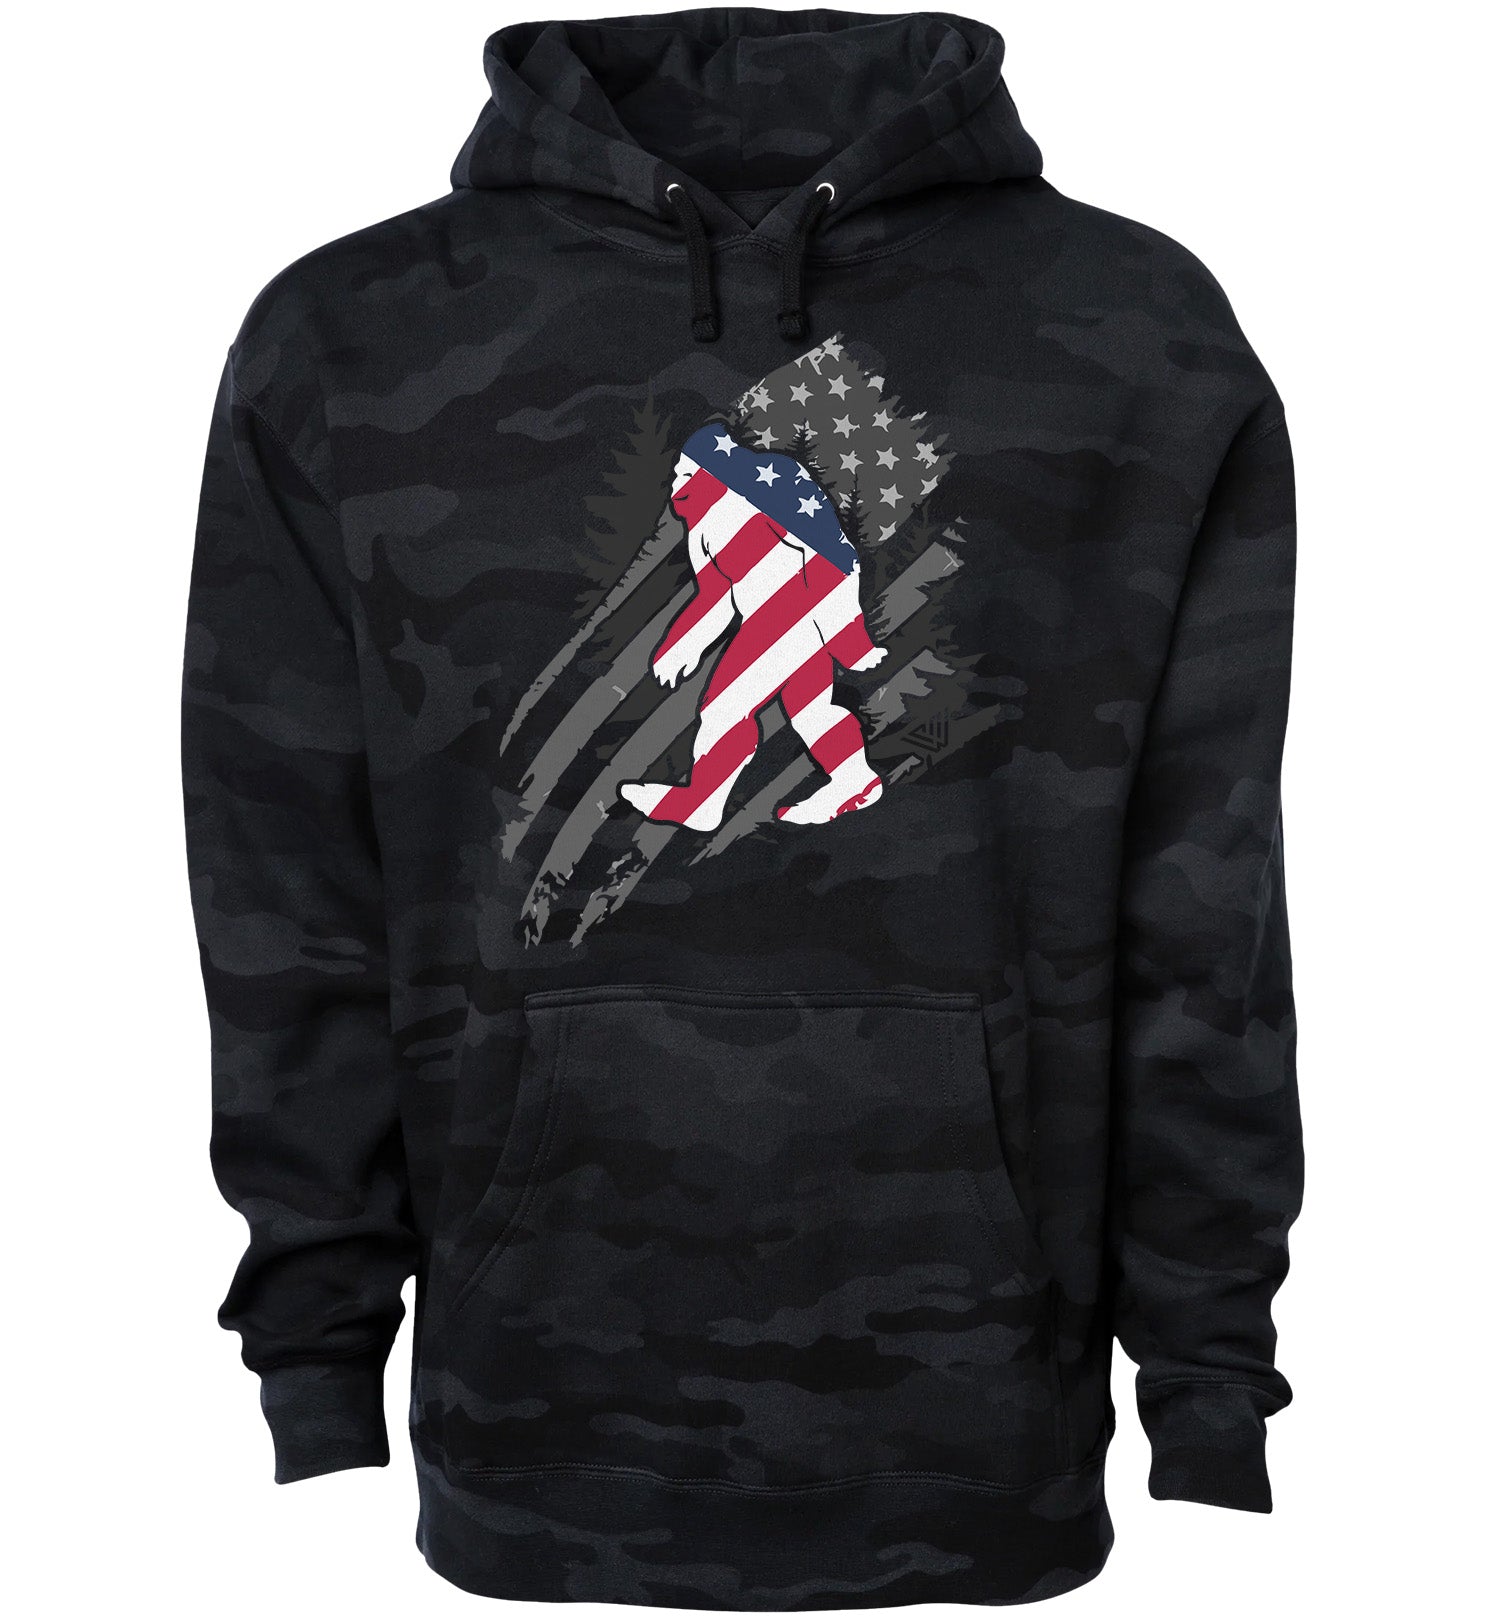 Bigfoot Sweatshirt - Patriotic - Pullover Hoodie - Front - Black Camo